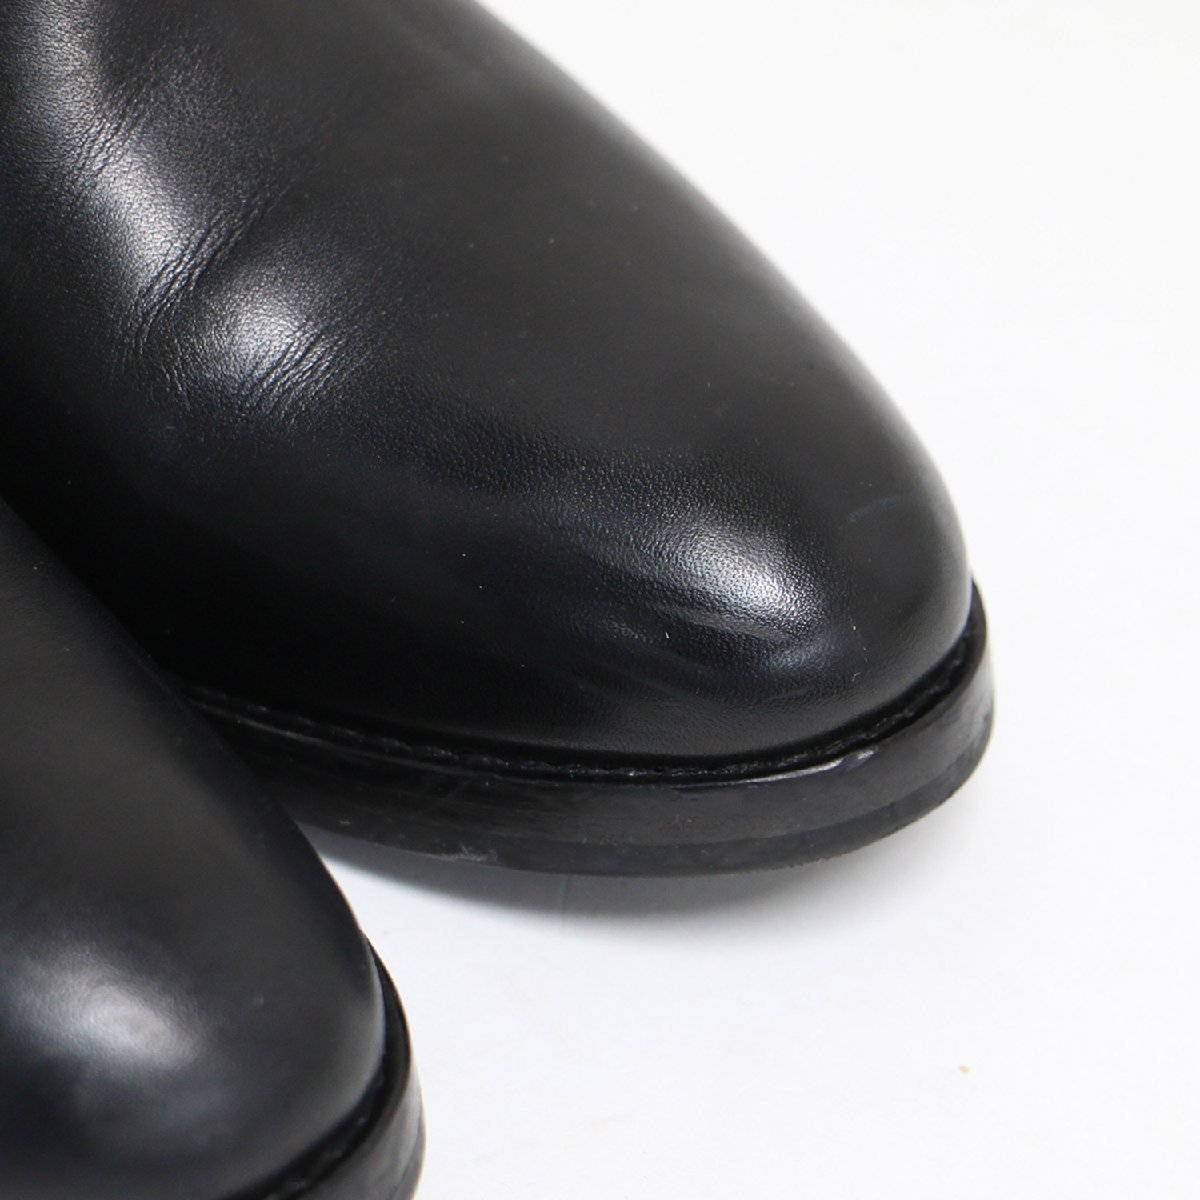 CORSO ROMA 9koruso Rome boots long boots shoes shoes black black 38(24.0cm) low heel plain tu leather boots beautiful .